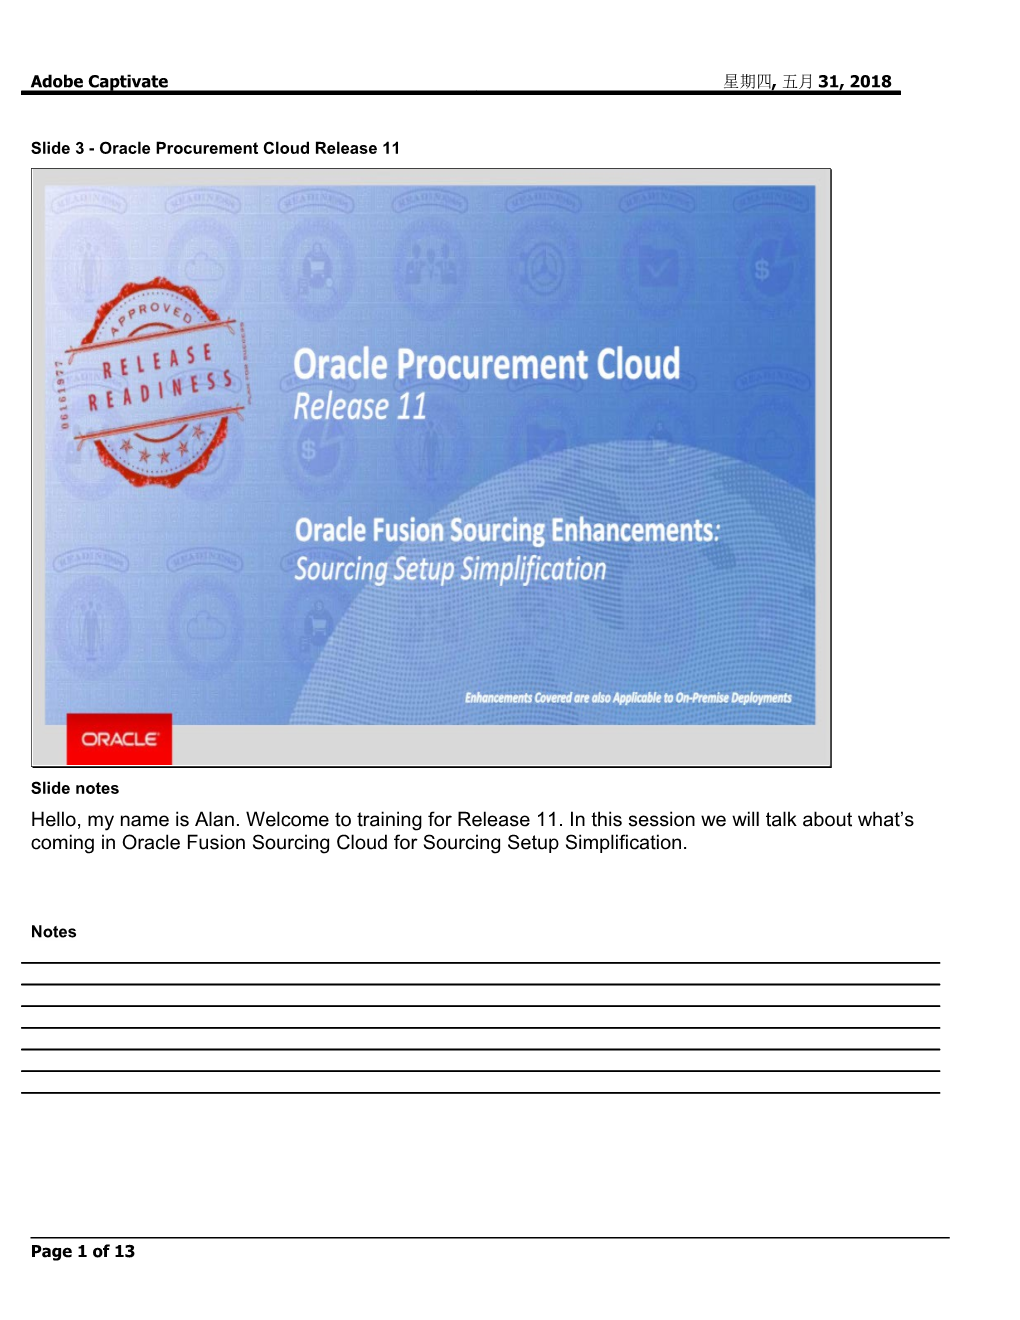 Slide 3 - Oracle Procurement Cloud Release 11